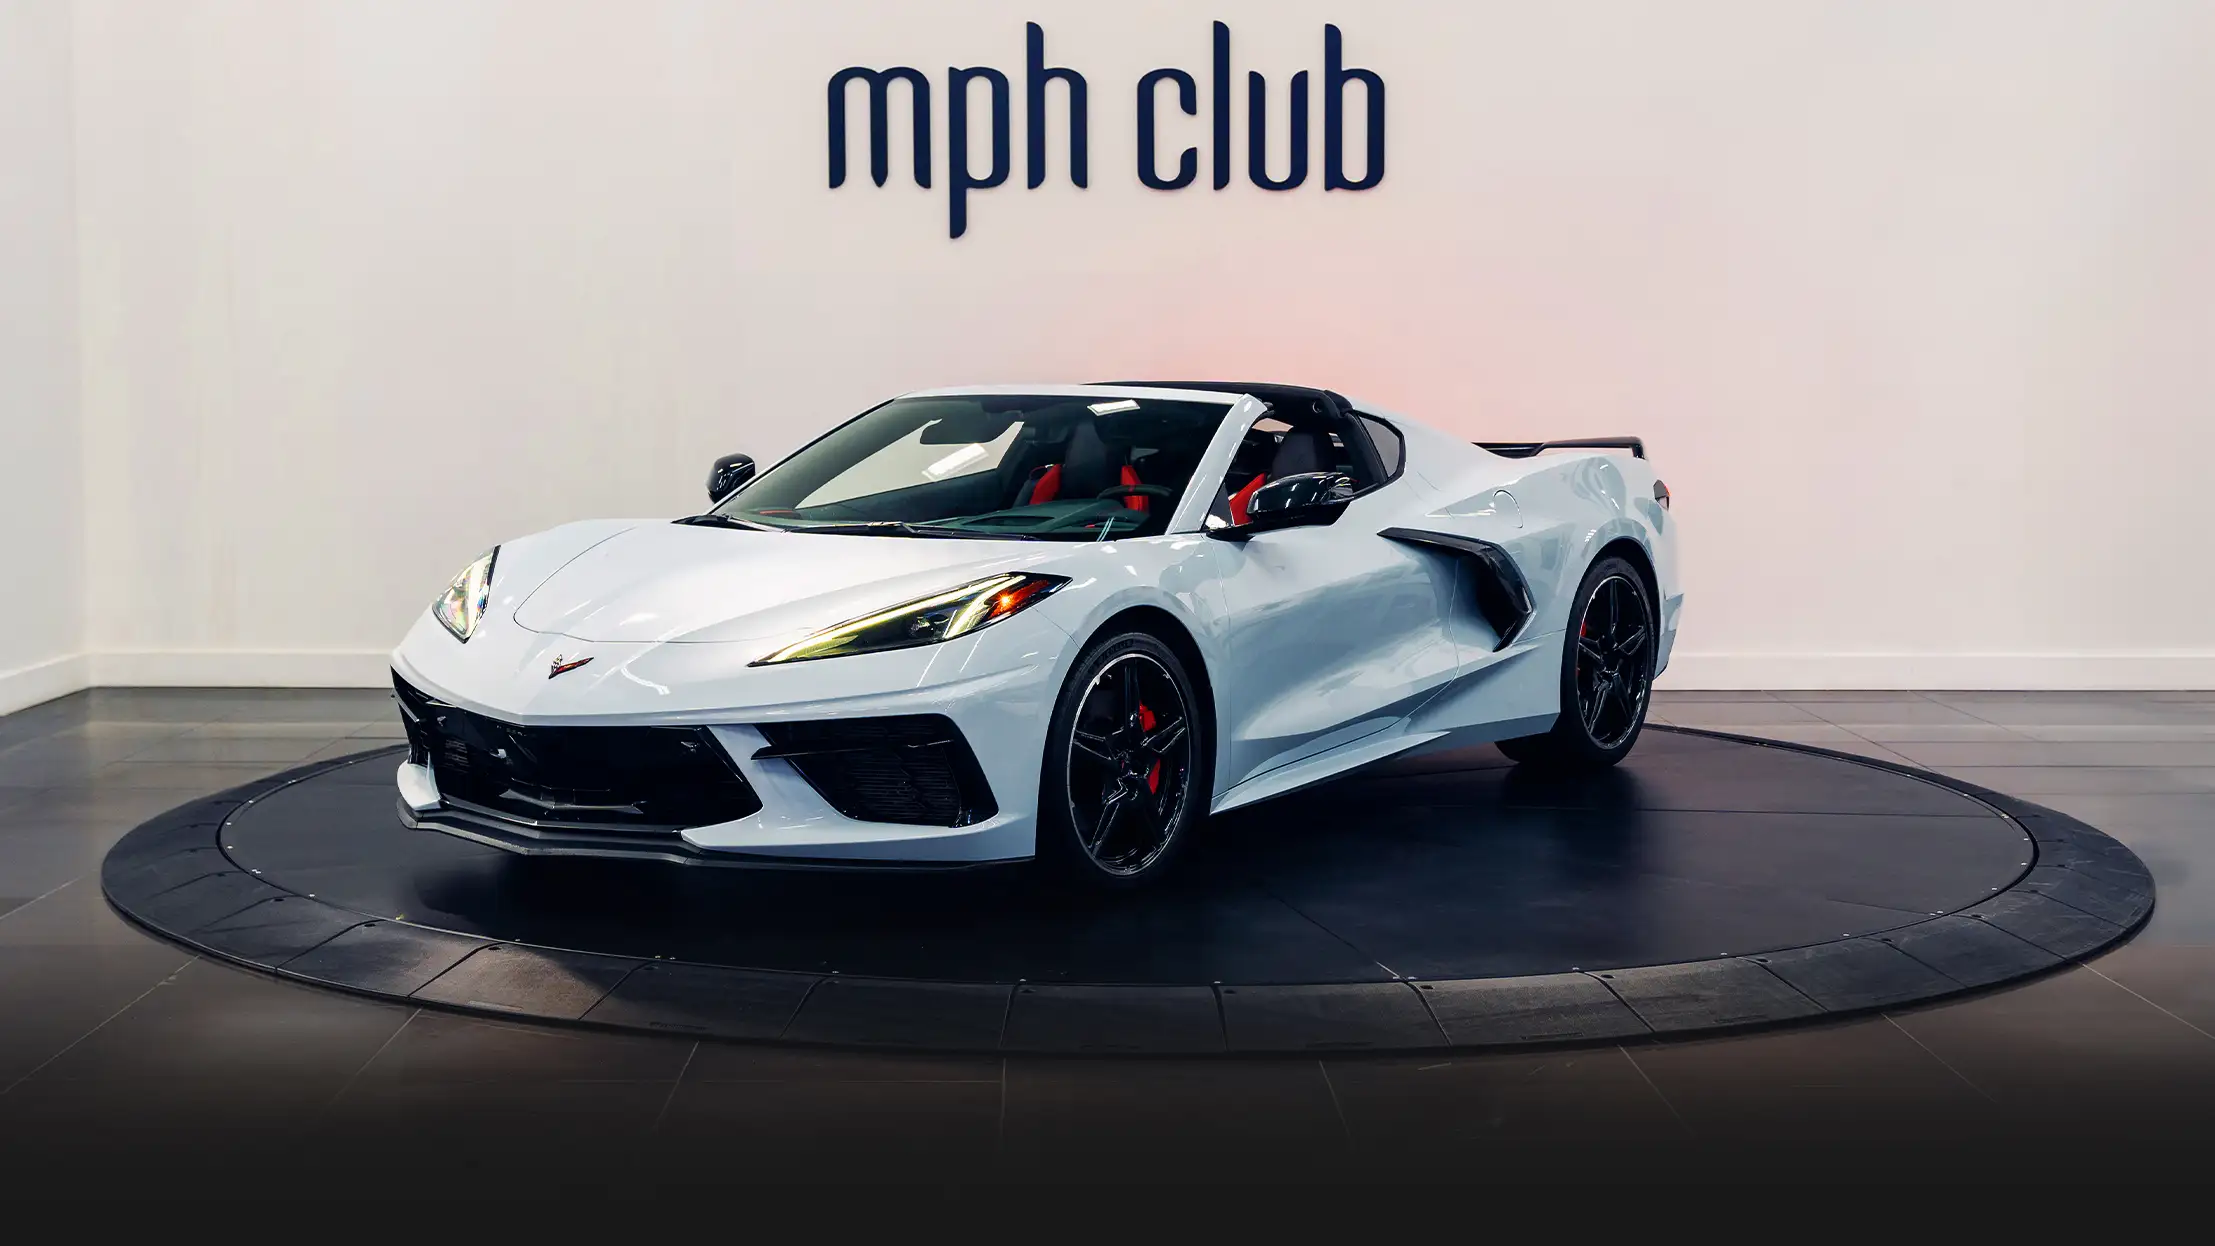 White Chevrolet Corvette C8 rental profile view turntable - mph club